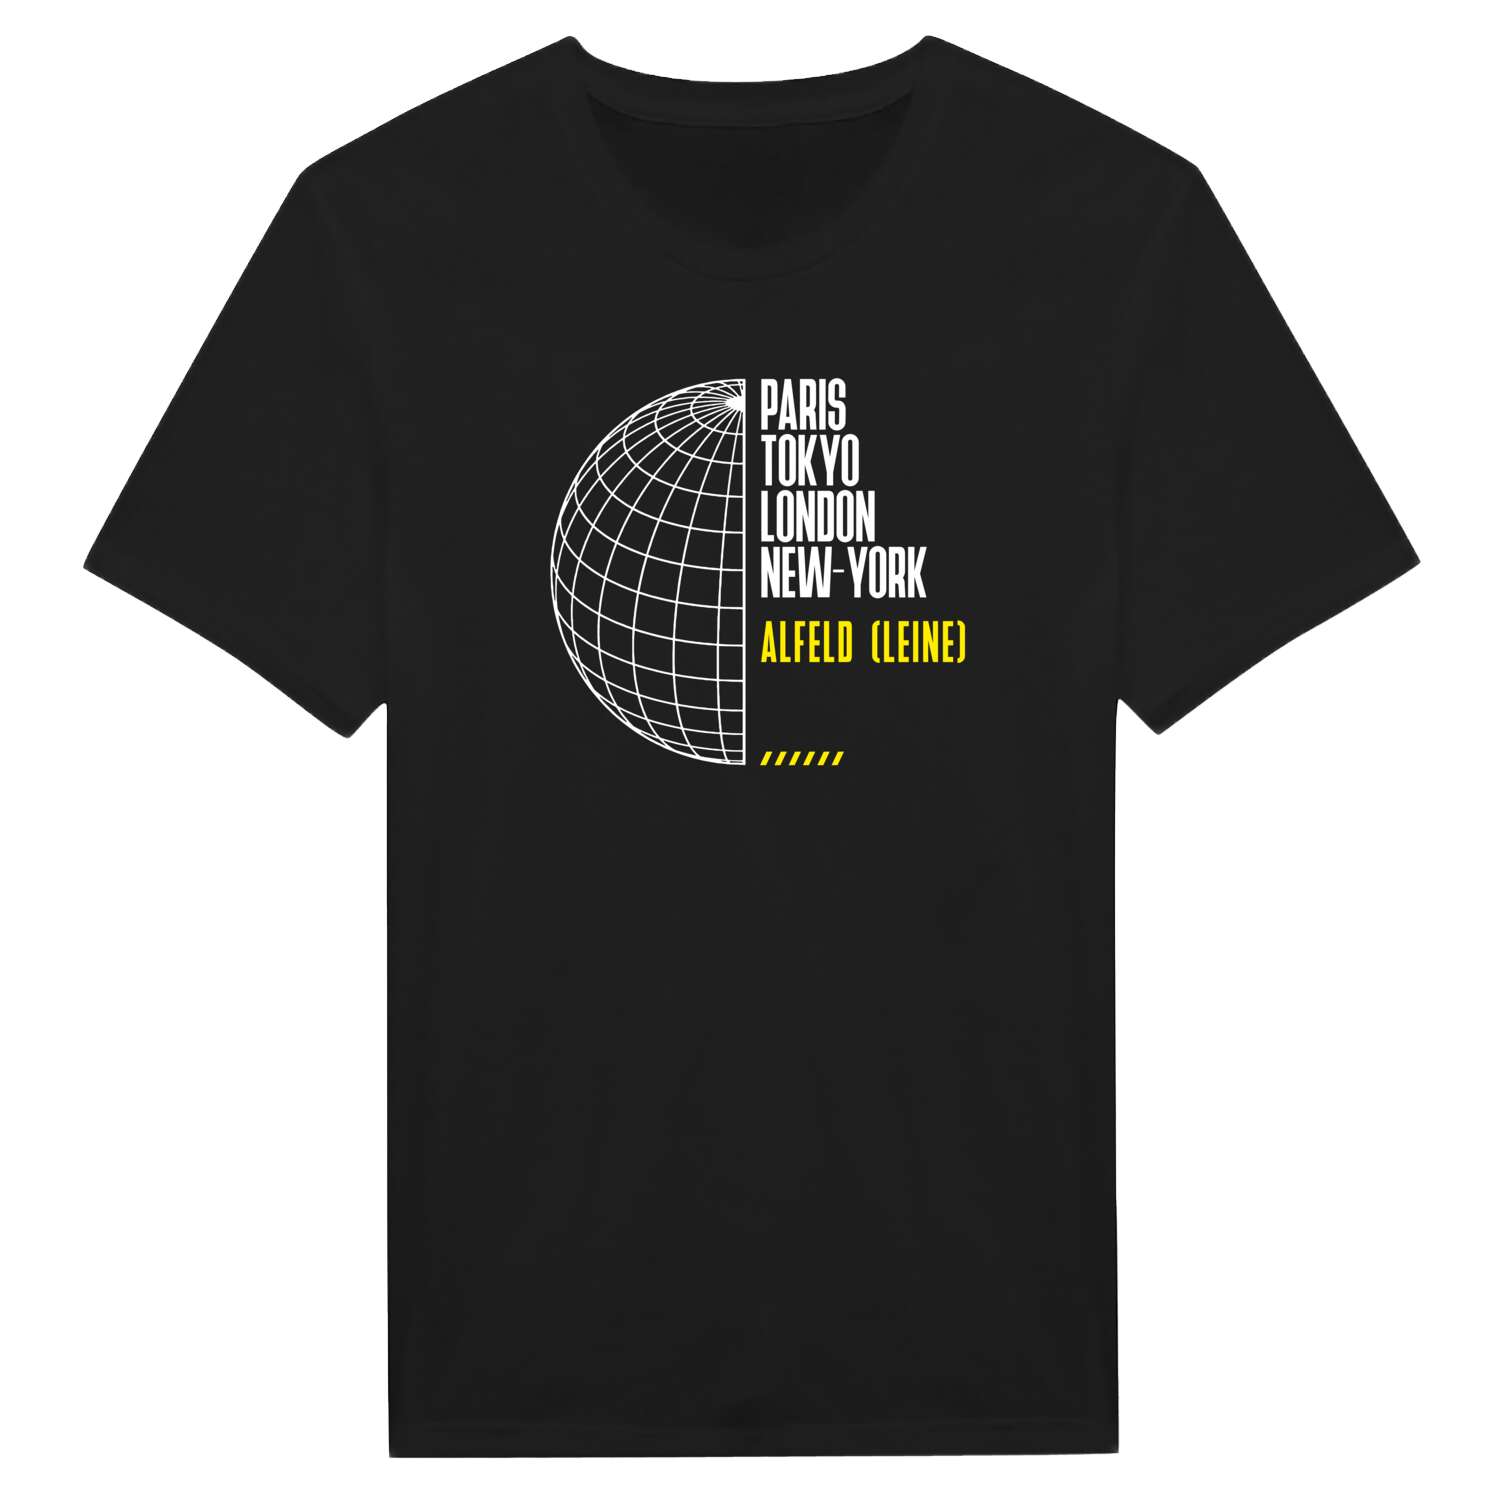 Alfeld (Leine) T-Shirt »Paris Tokyo London«